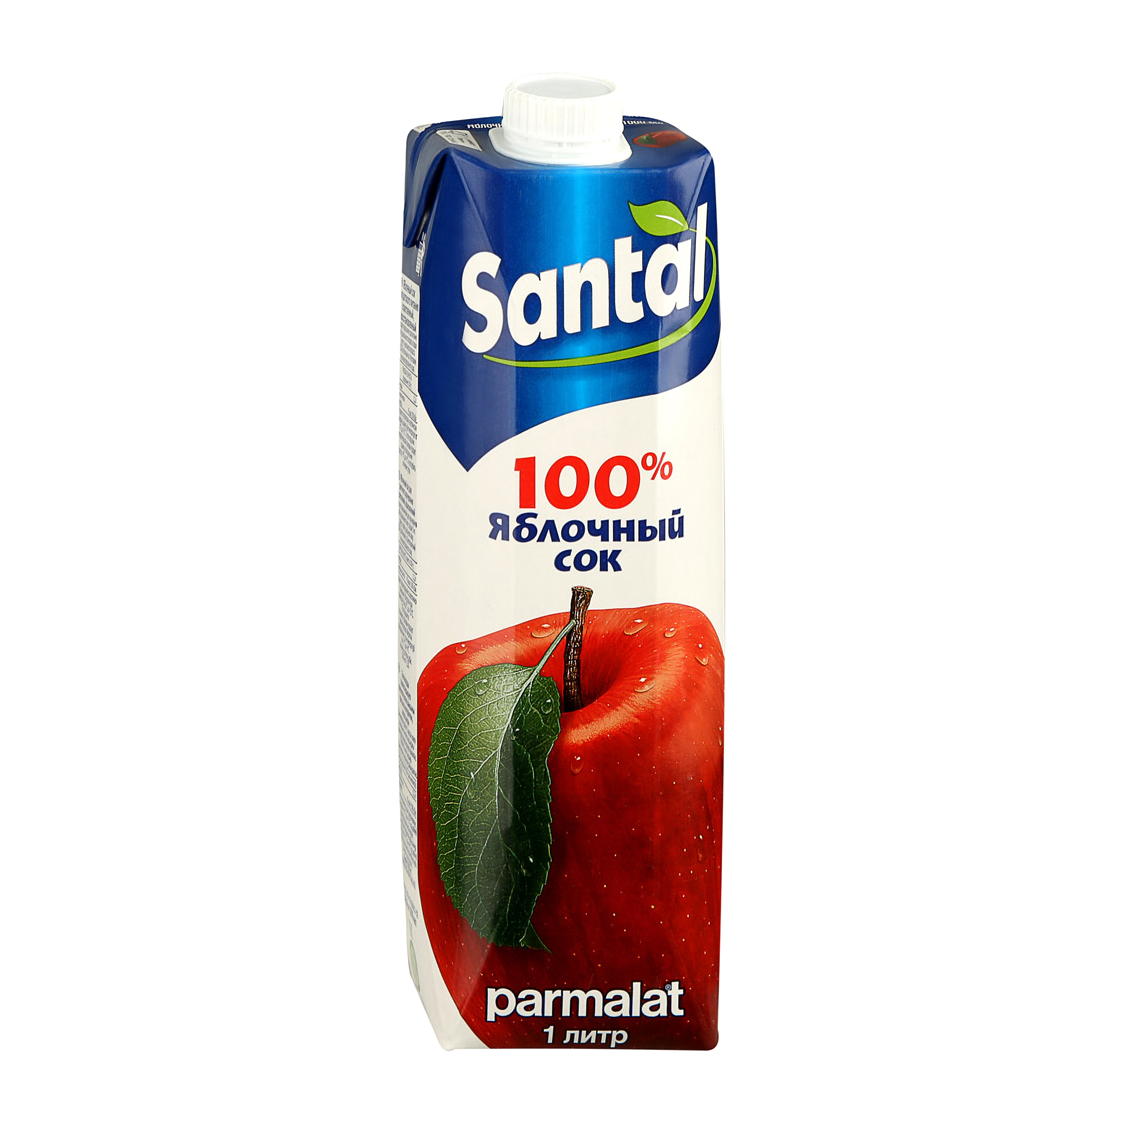 Сок Santal яблочный 100% 1 л